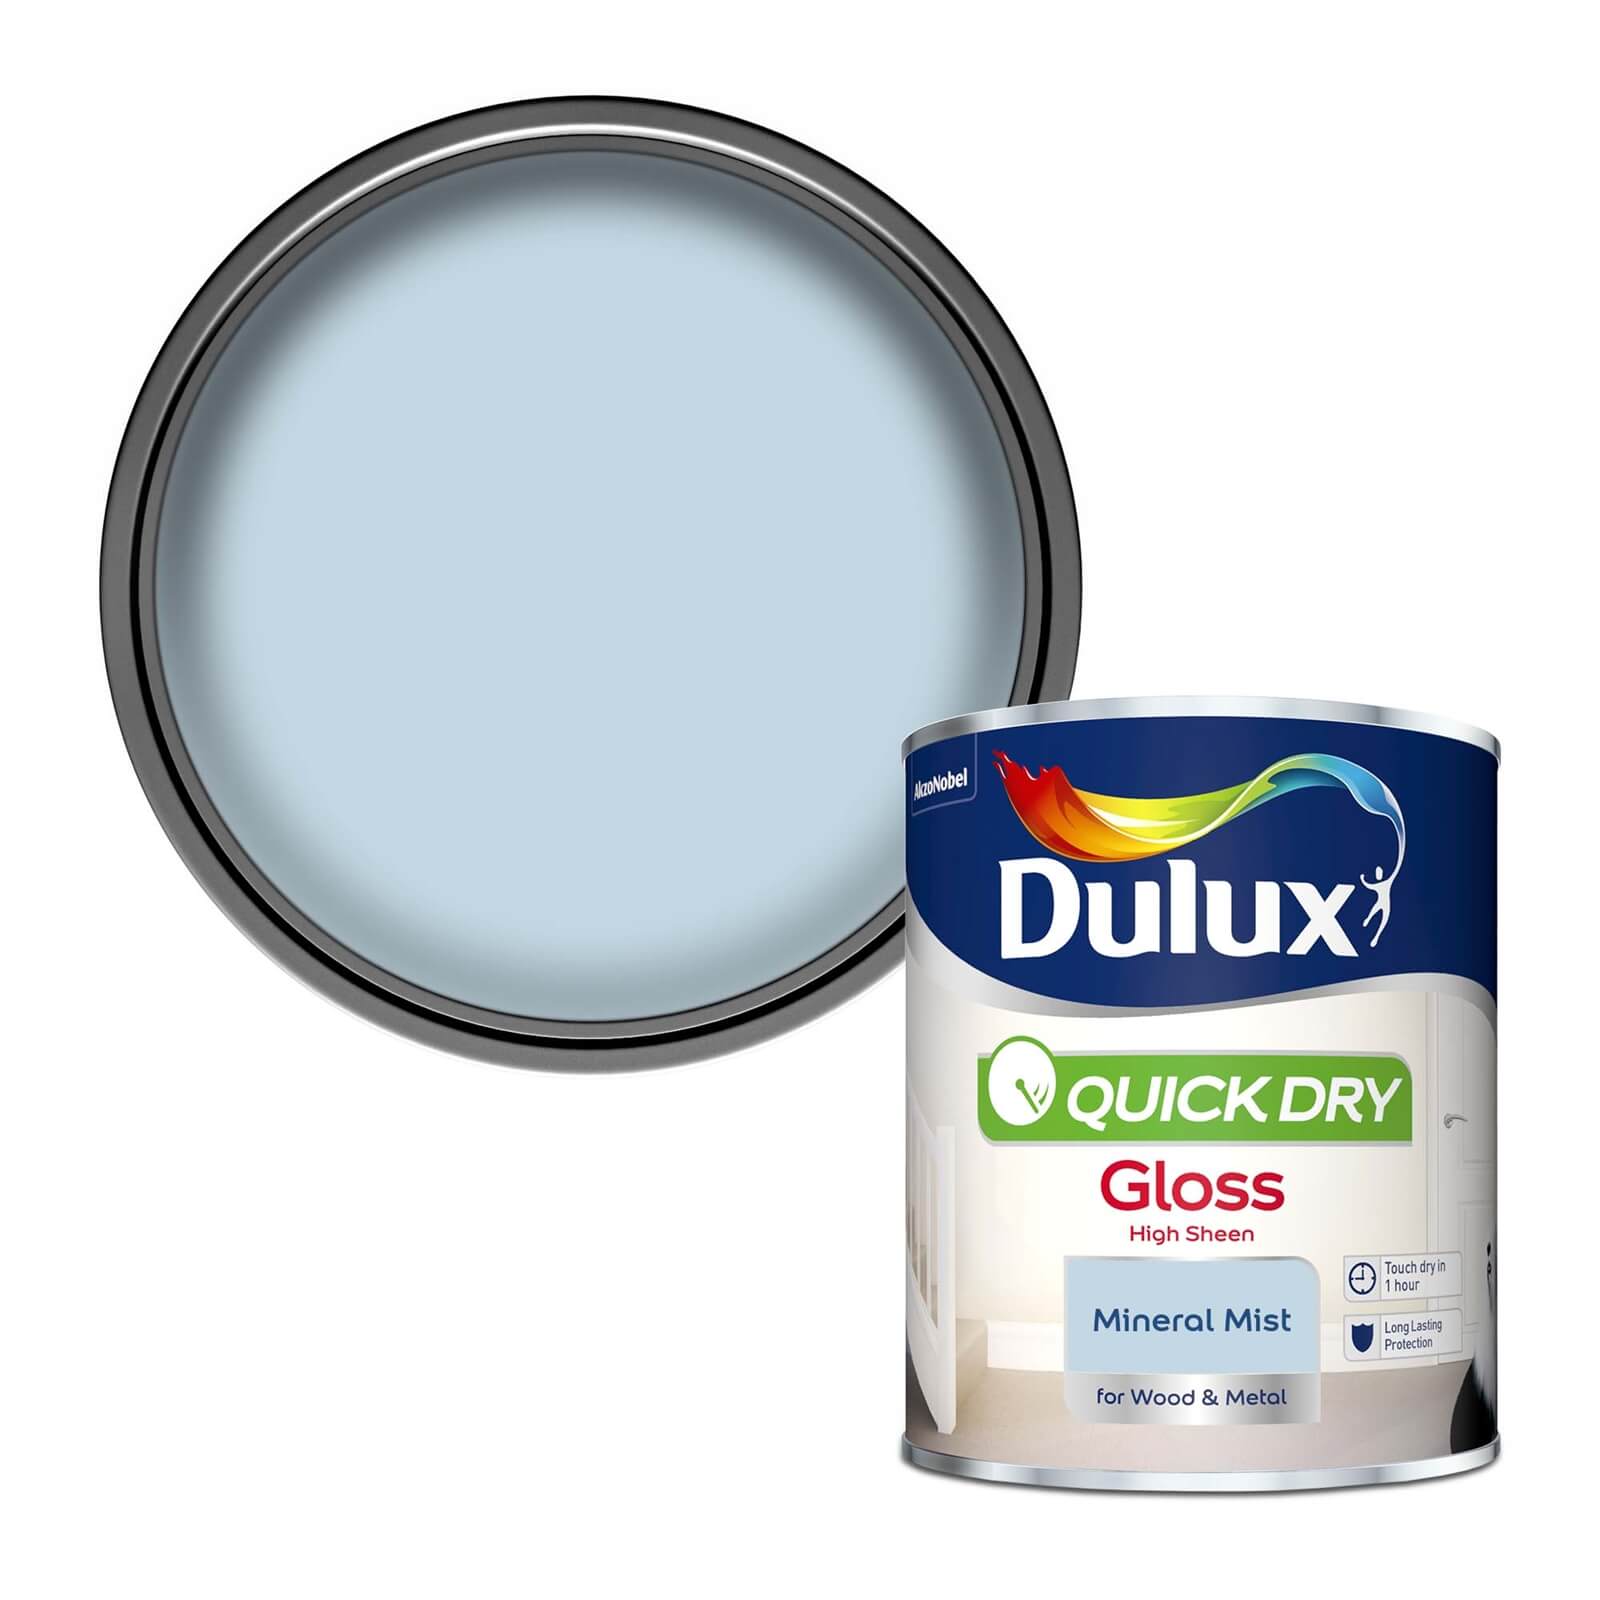 Dulux Quick Dry Gloss Paint Mineral Mist - 750ml